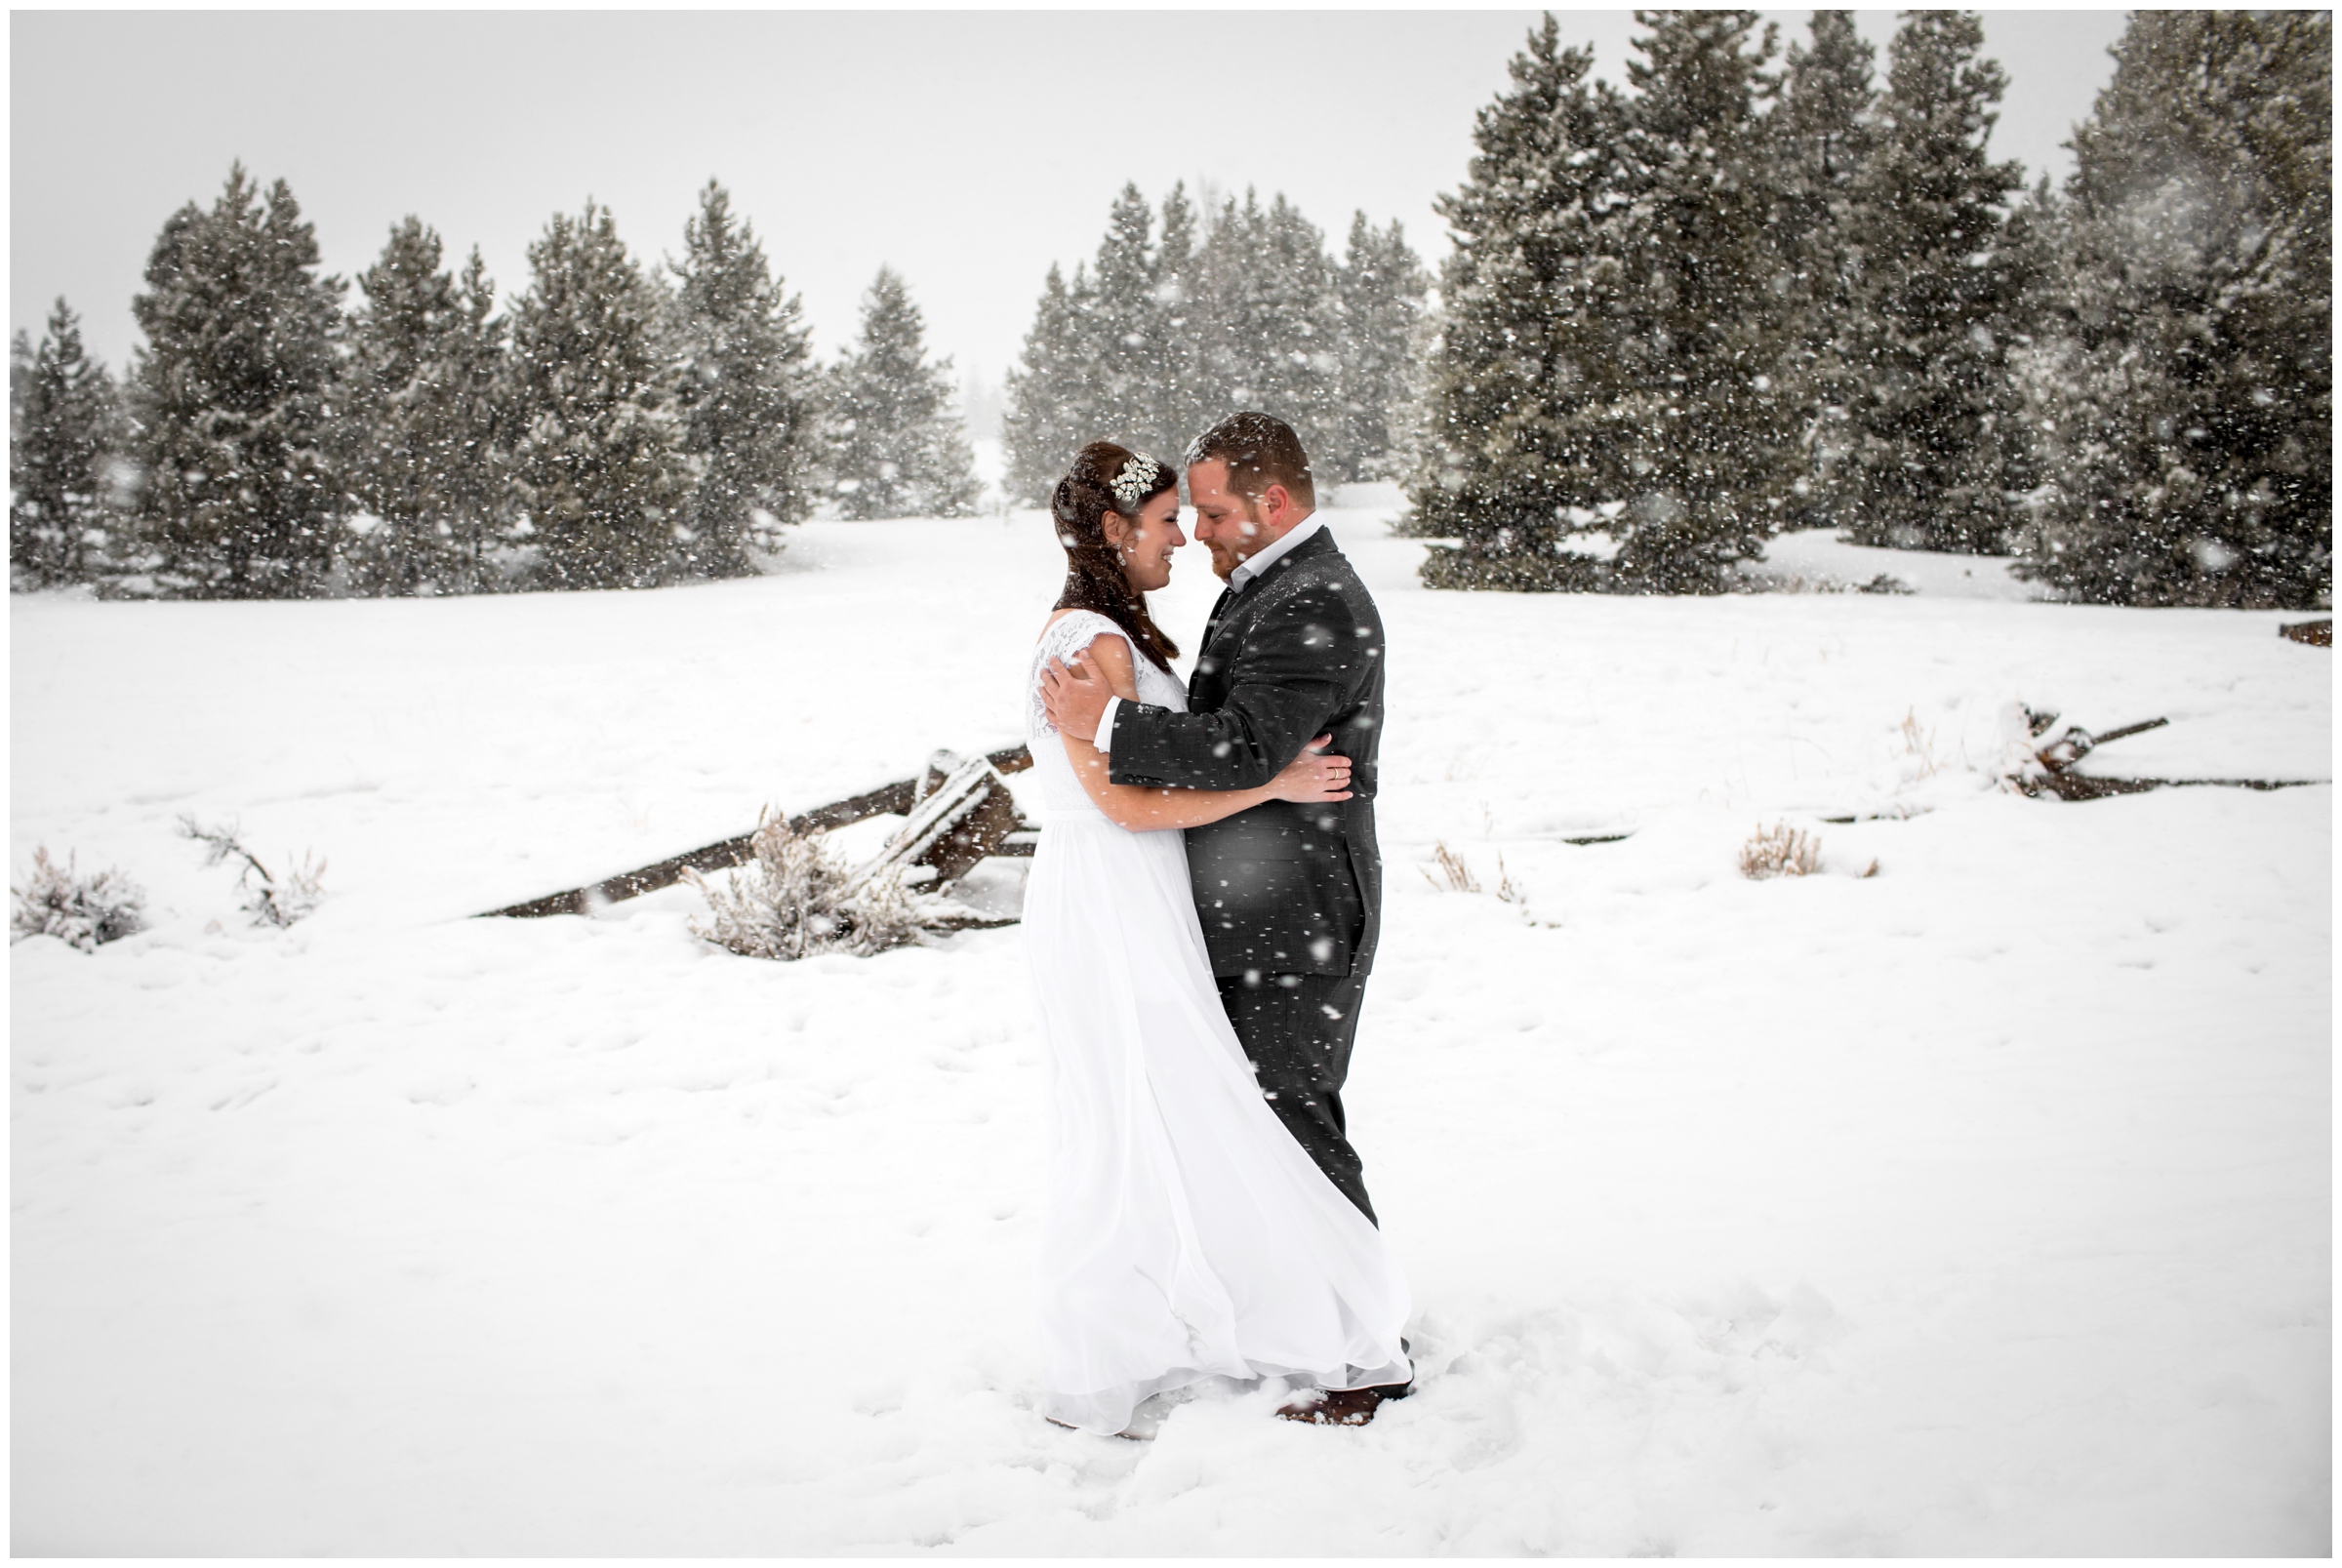 Breckenridge Colorado winter wedding inspiration by Plum Pretty Photography 